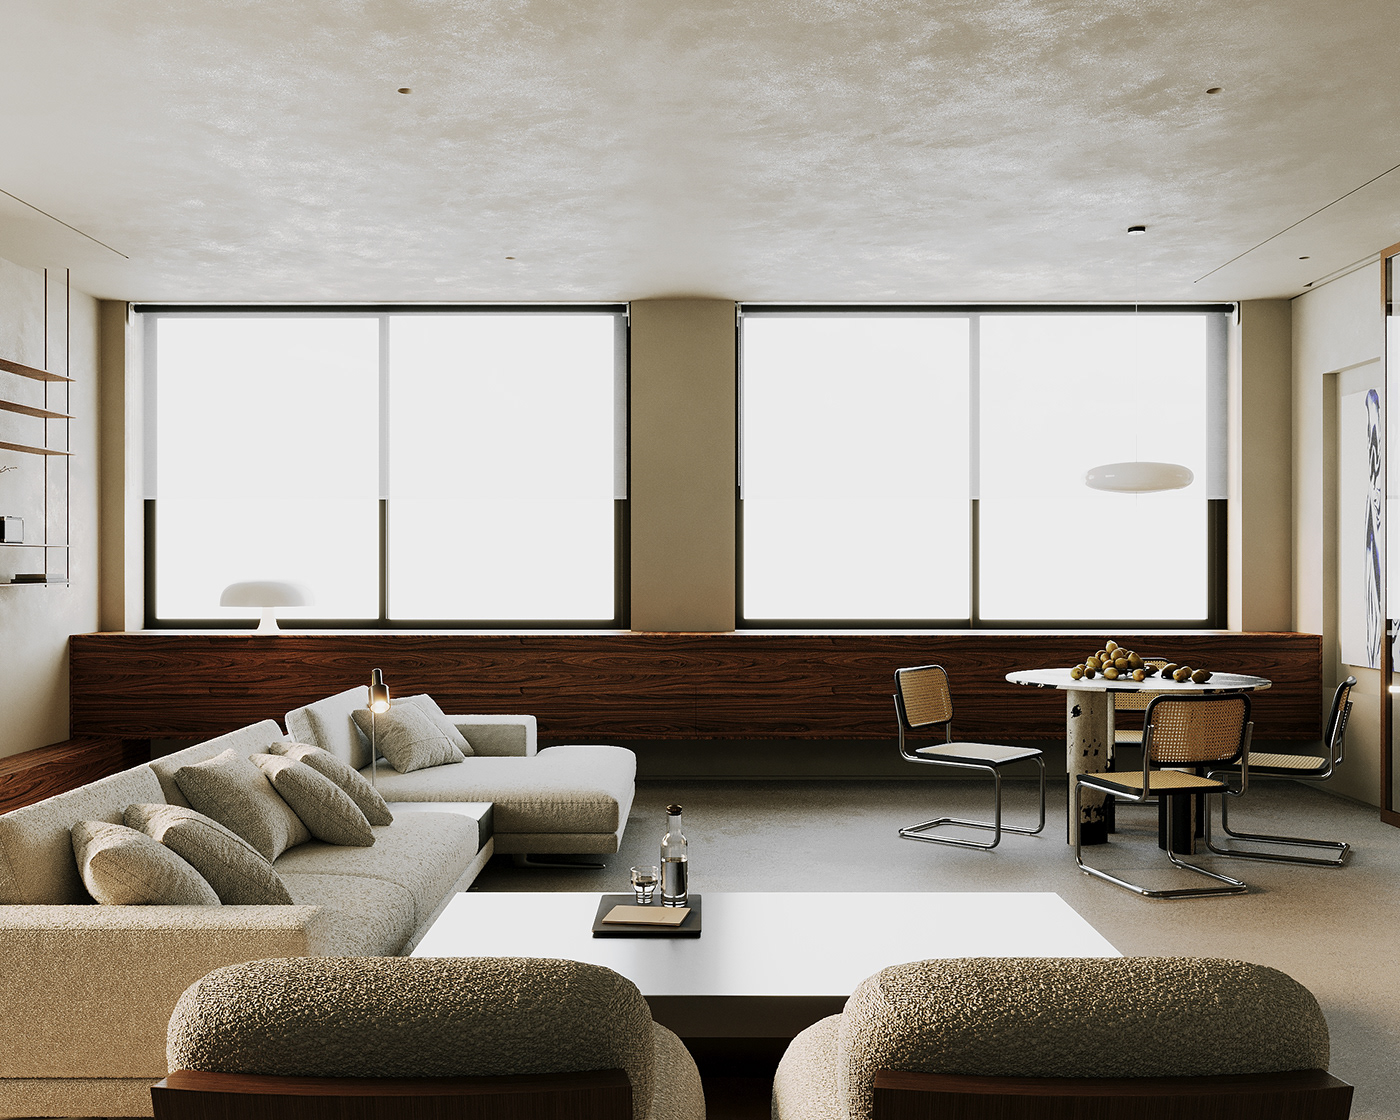 3ds max architecture visualization Render design interior design  living room residential modern corona